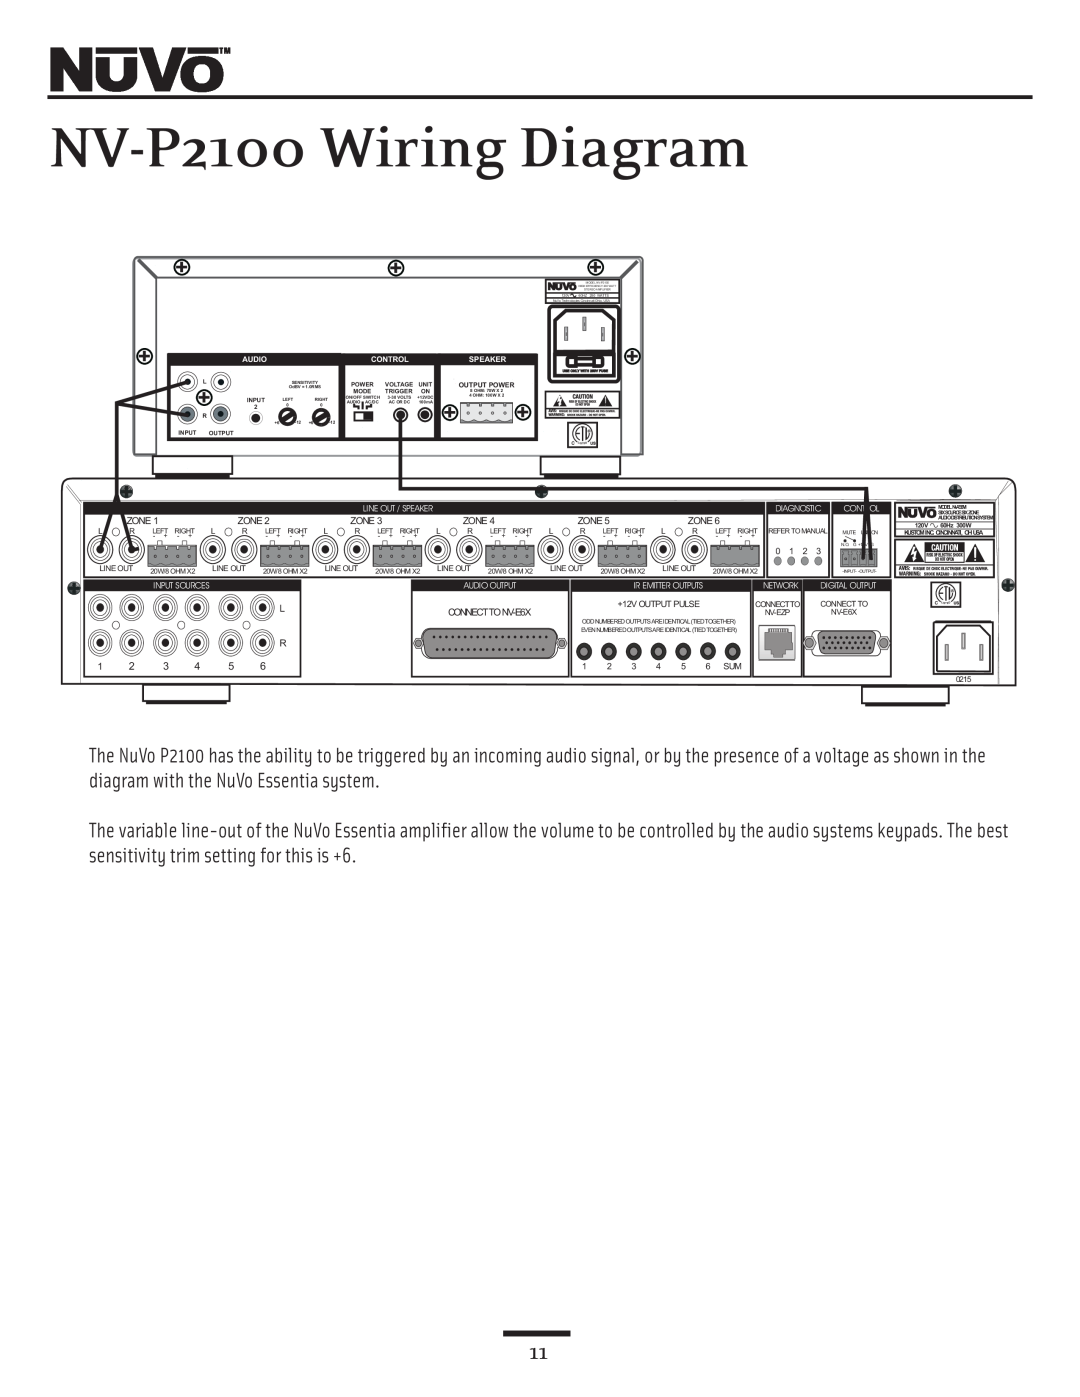 Nuvo owner manual NV-P2100Wiring Diagram 